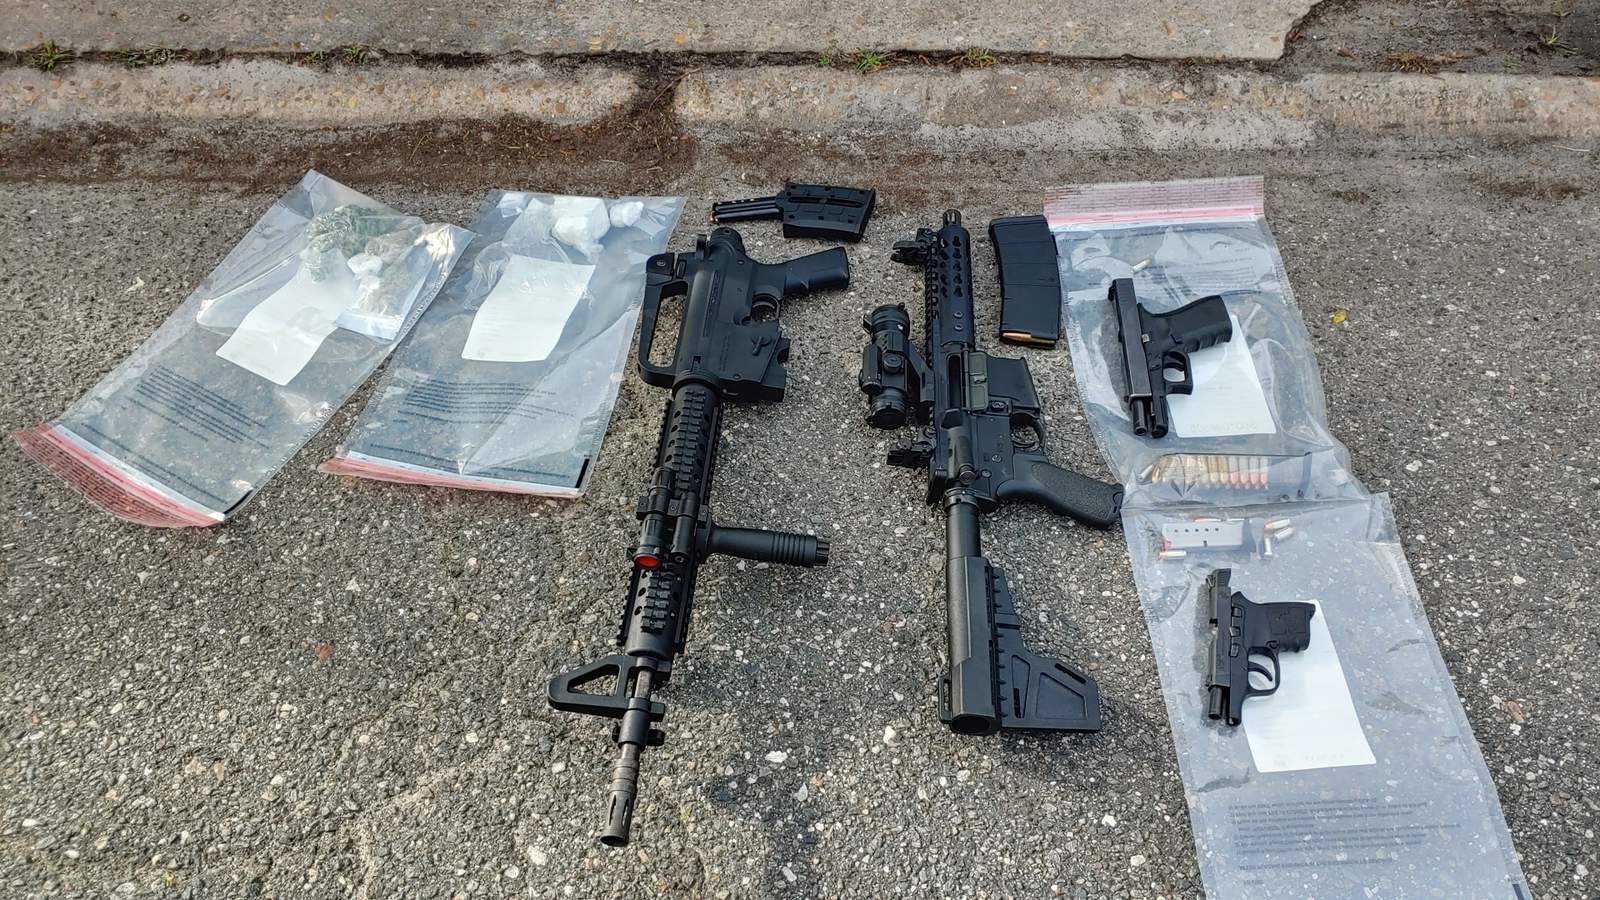 Guns, drugs, stolen property seized in federal raid on Westside